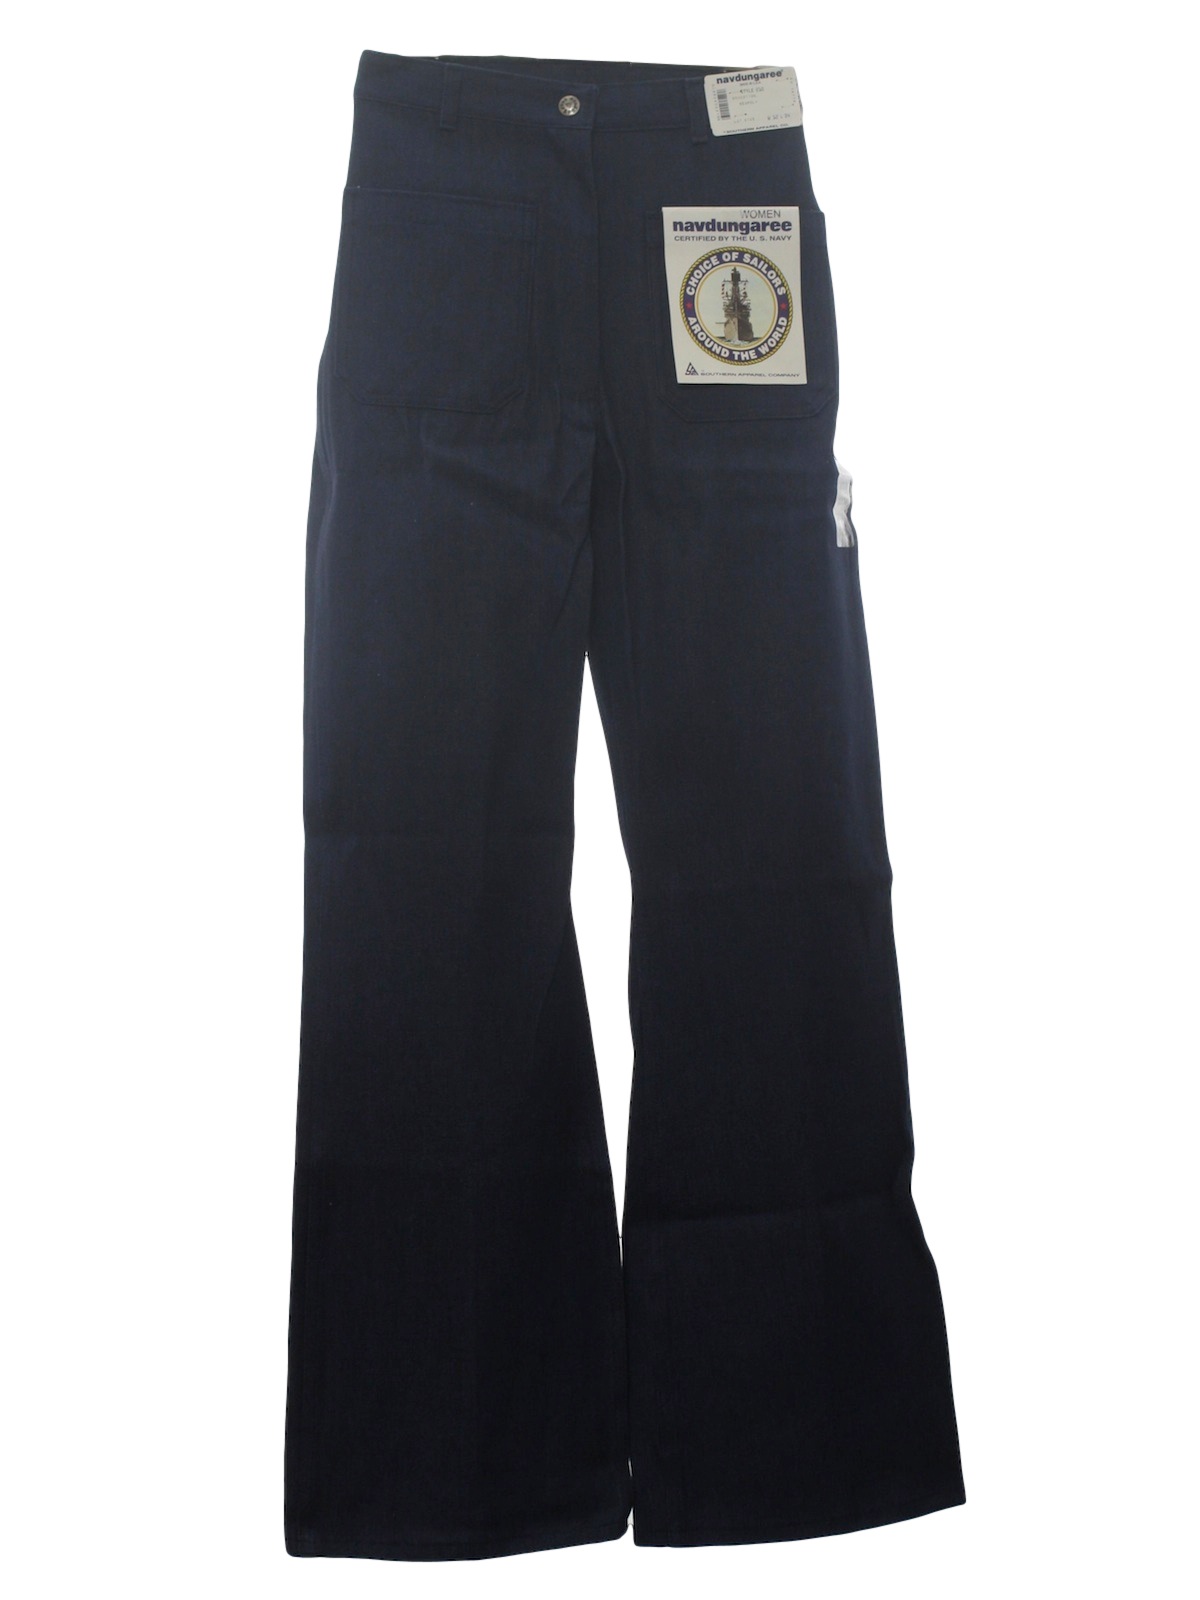 70s Vintage Navdungaree Bellbottom Pants: 70s style -Navdungaree ...